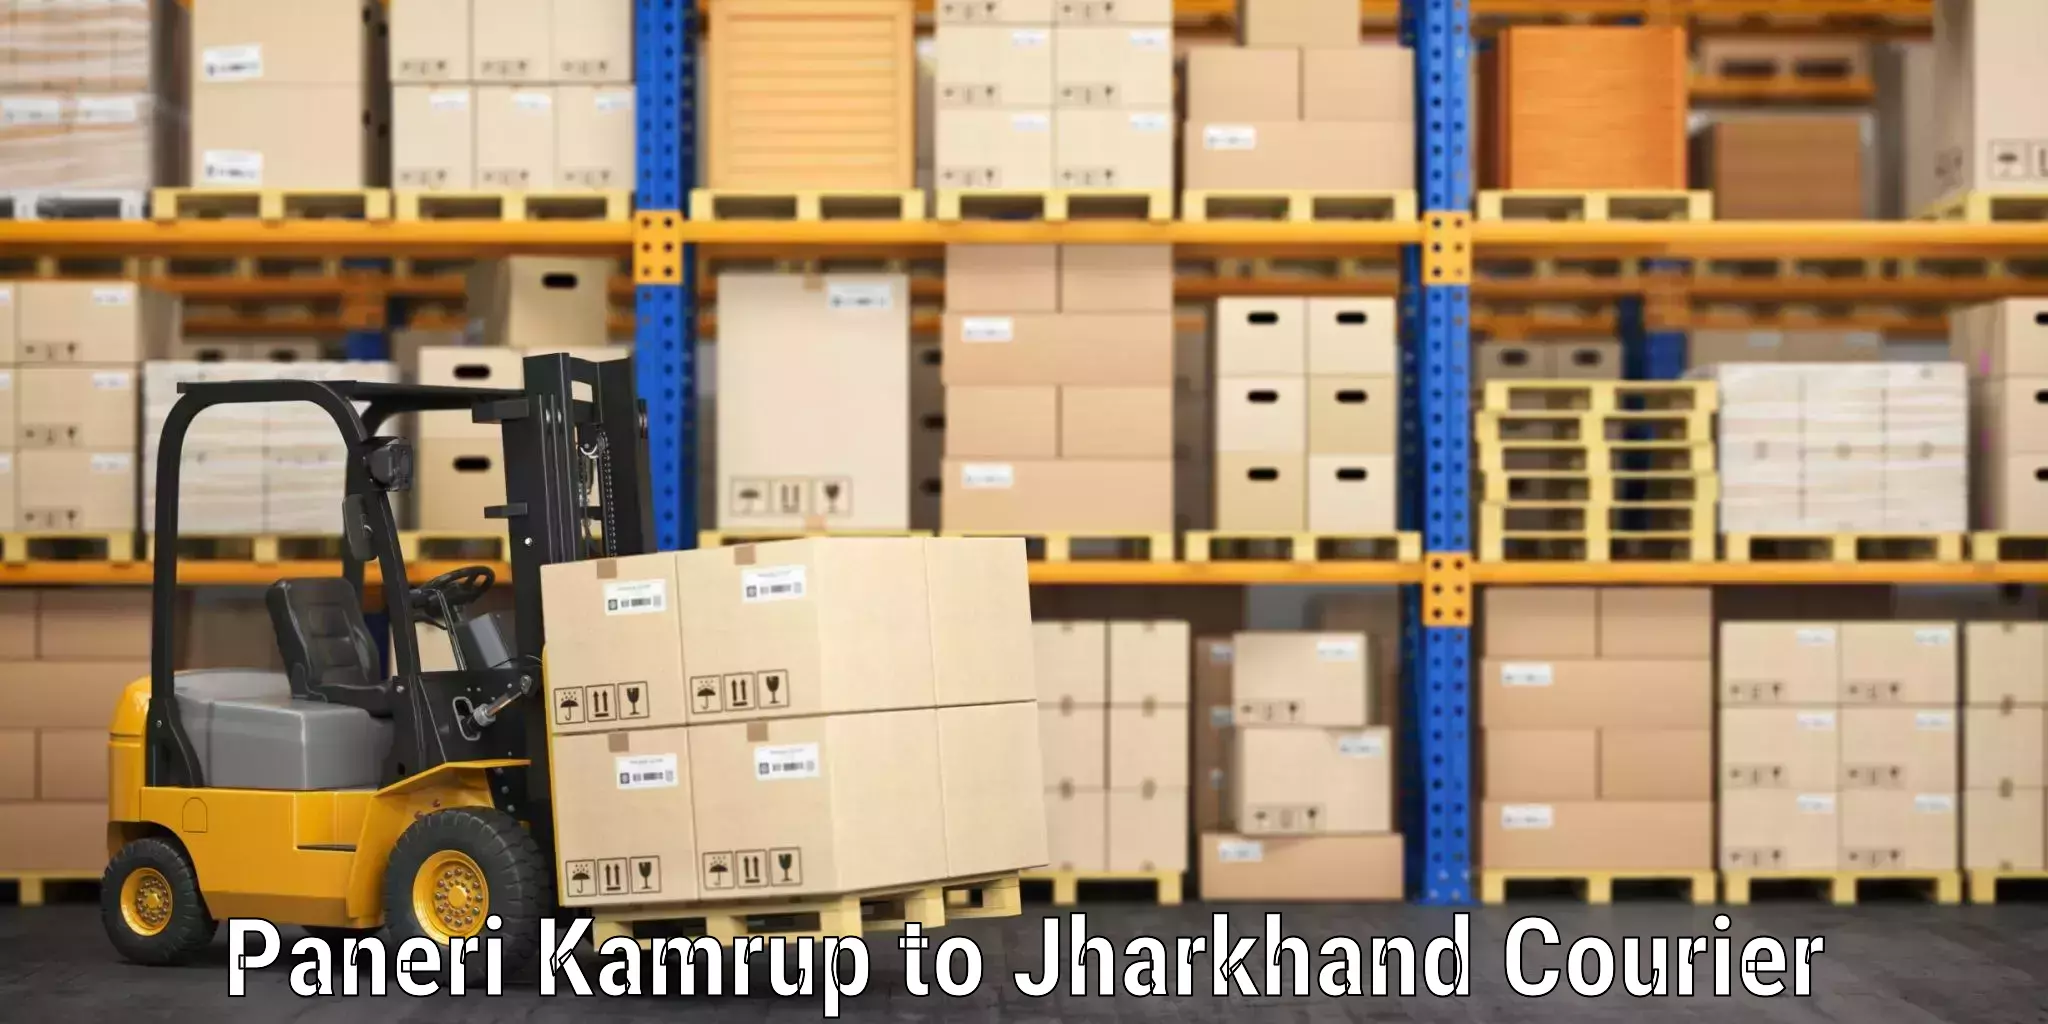 Luggage shipping service in Paneri Kamrup to Medininagar